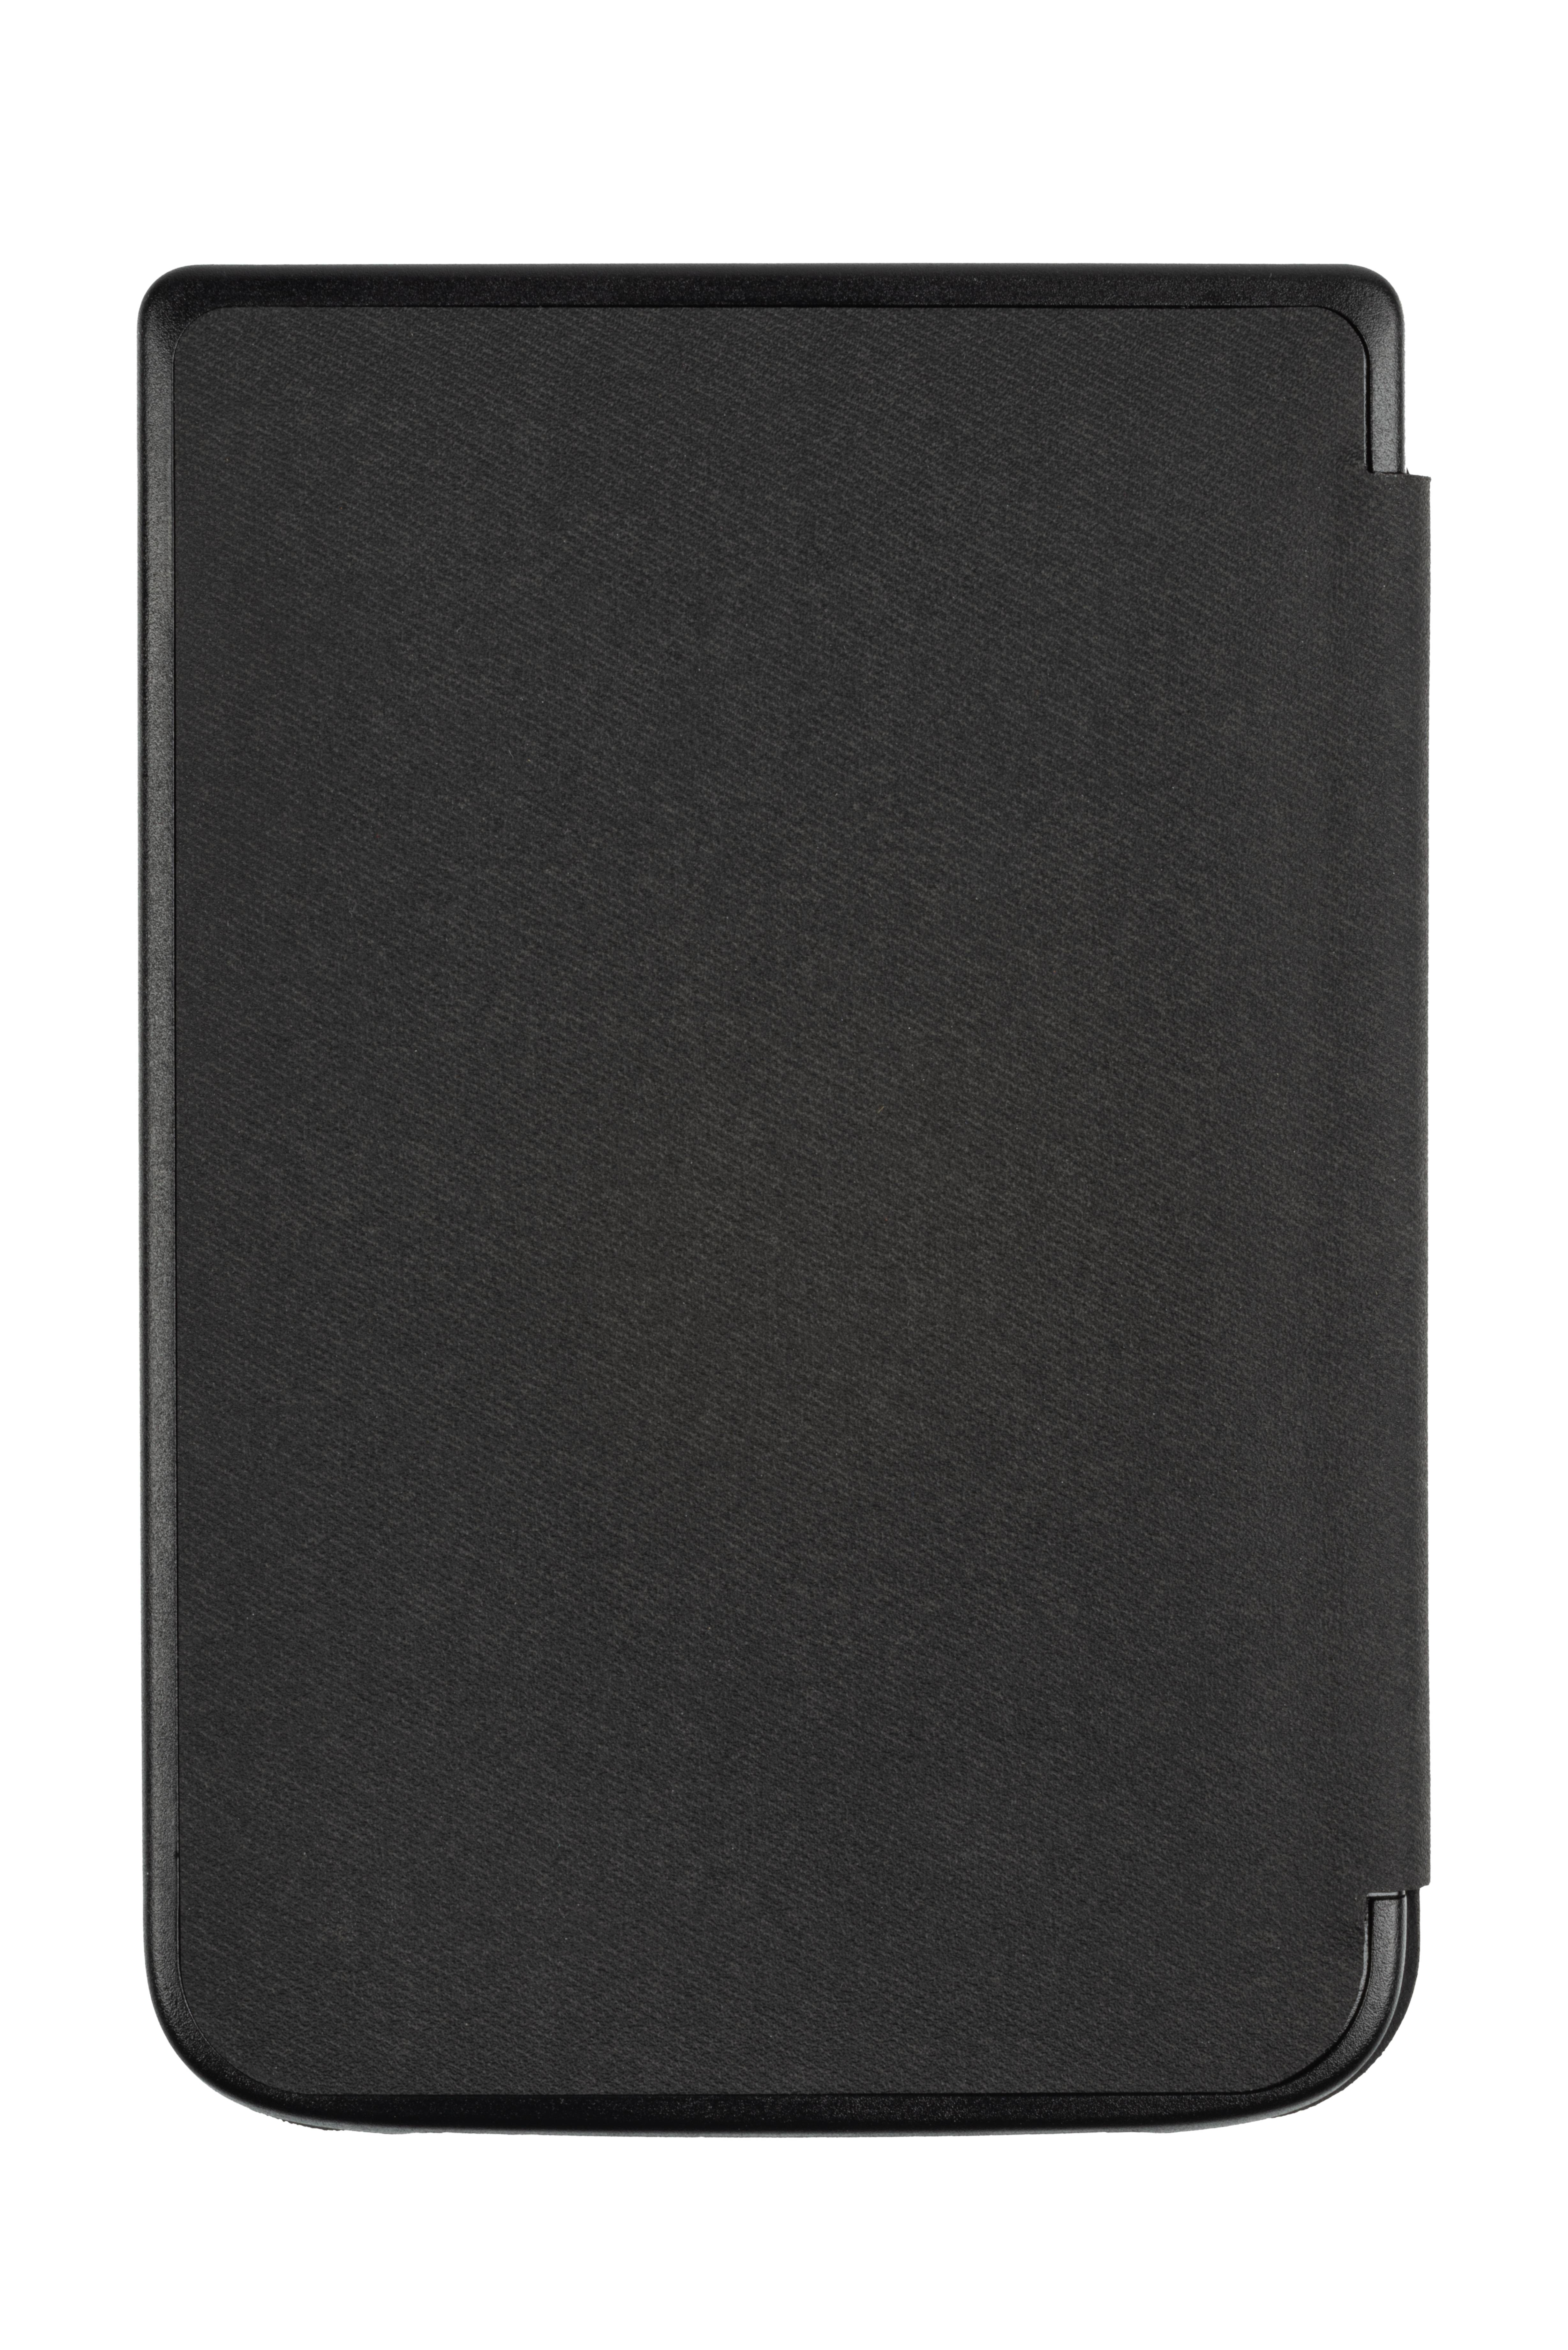 Rca Informatique - image du produit : POCKETBOOK TOUCH HD 3/TOUCH LUX 5 EASY-CLICK COVER BLACK